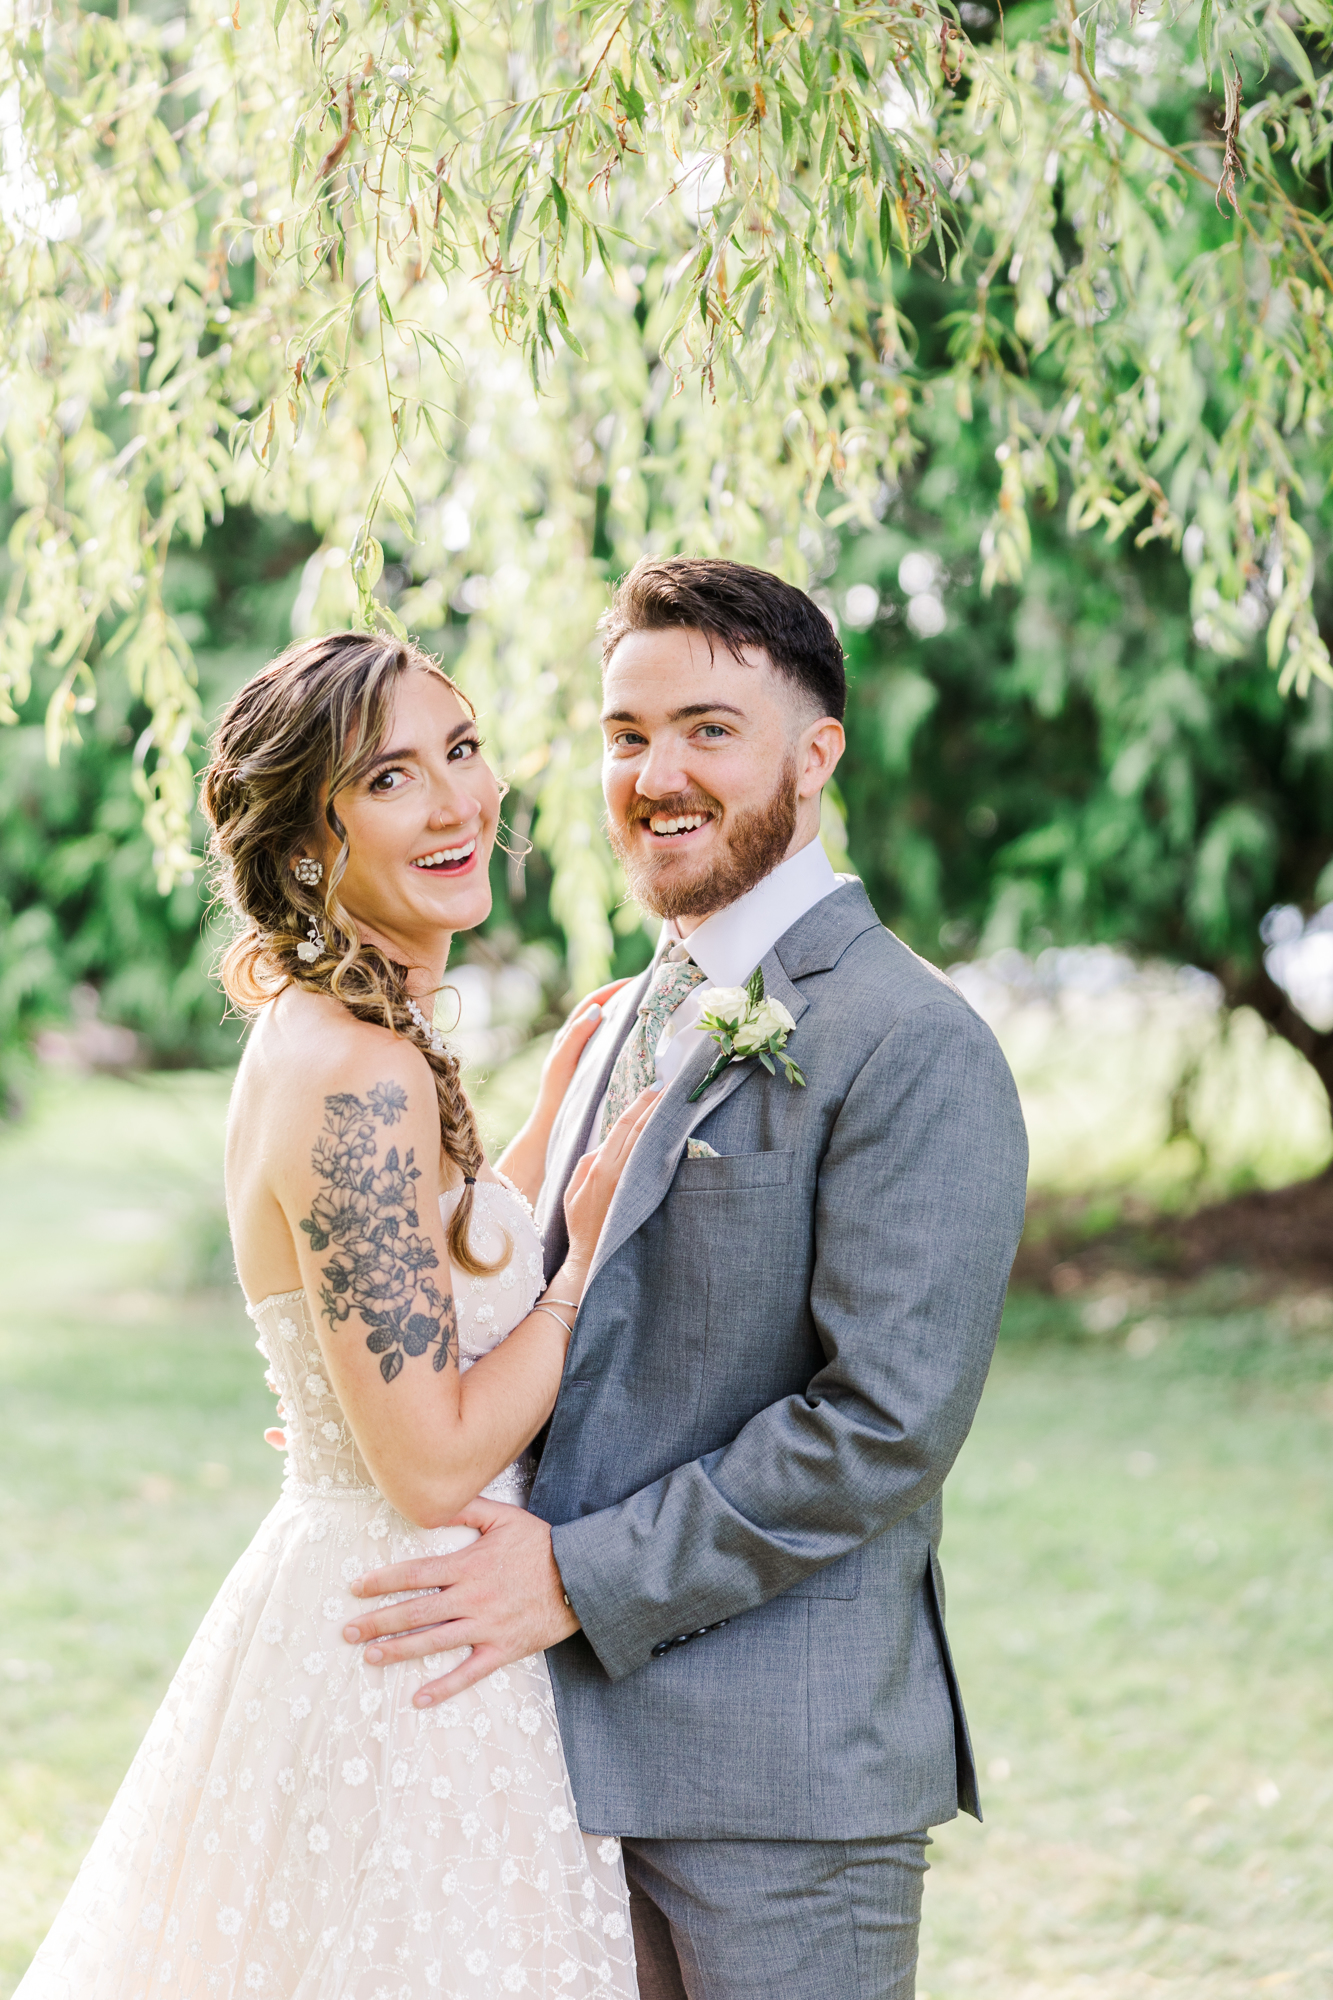 Breathtaking Flowerfield Wedding Portraits on Long Island